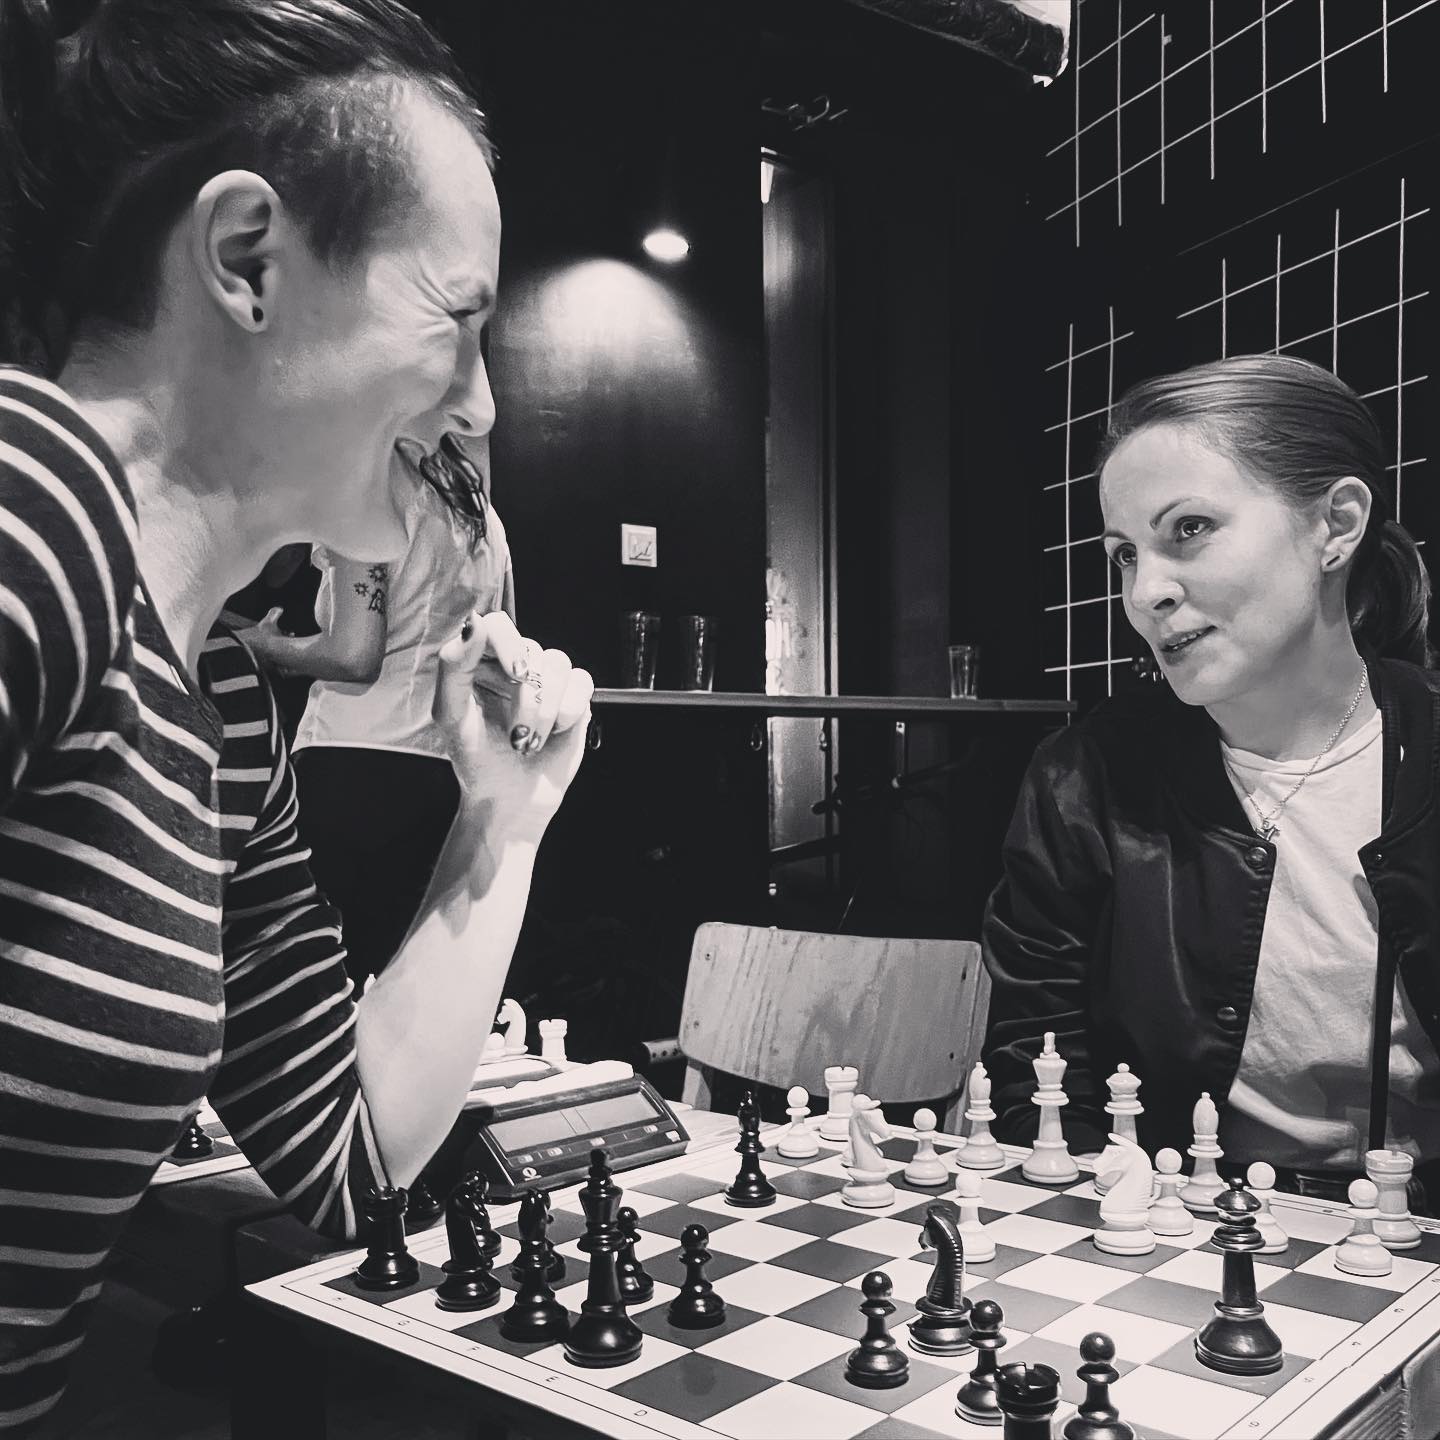 Two women playing chess